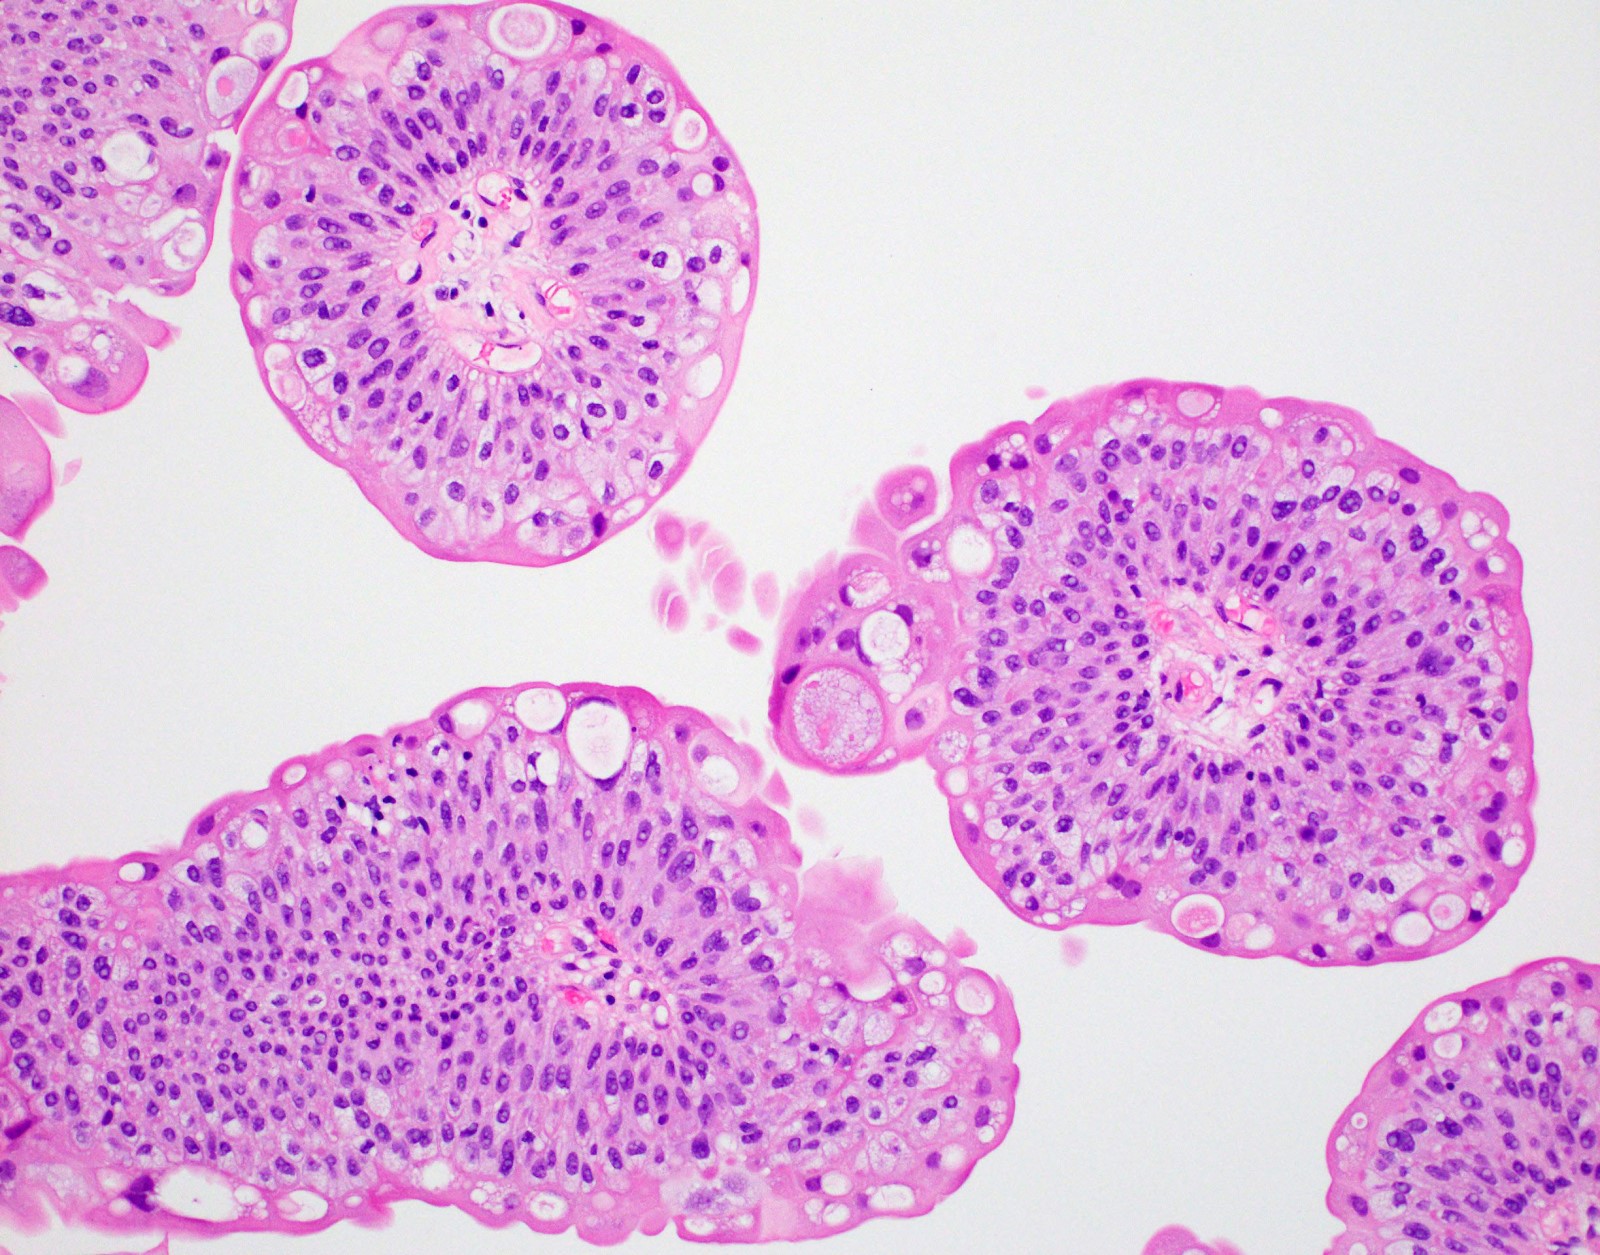 bladder papillomas